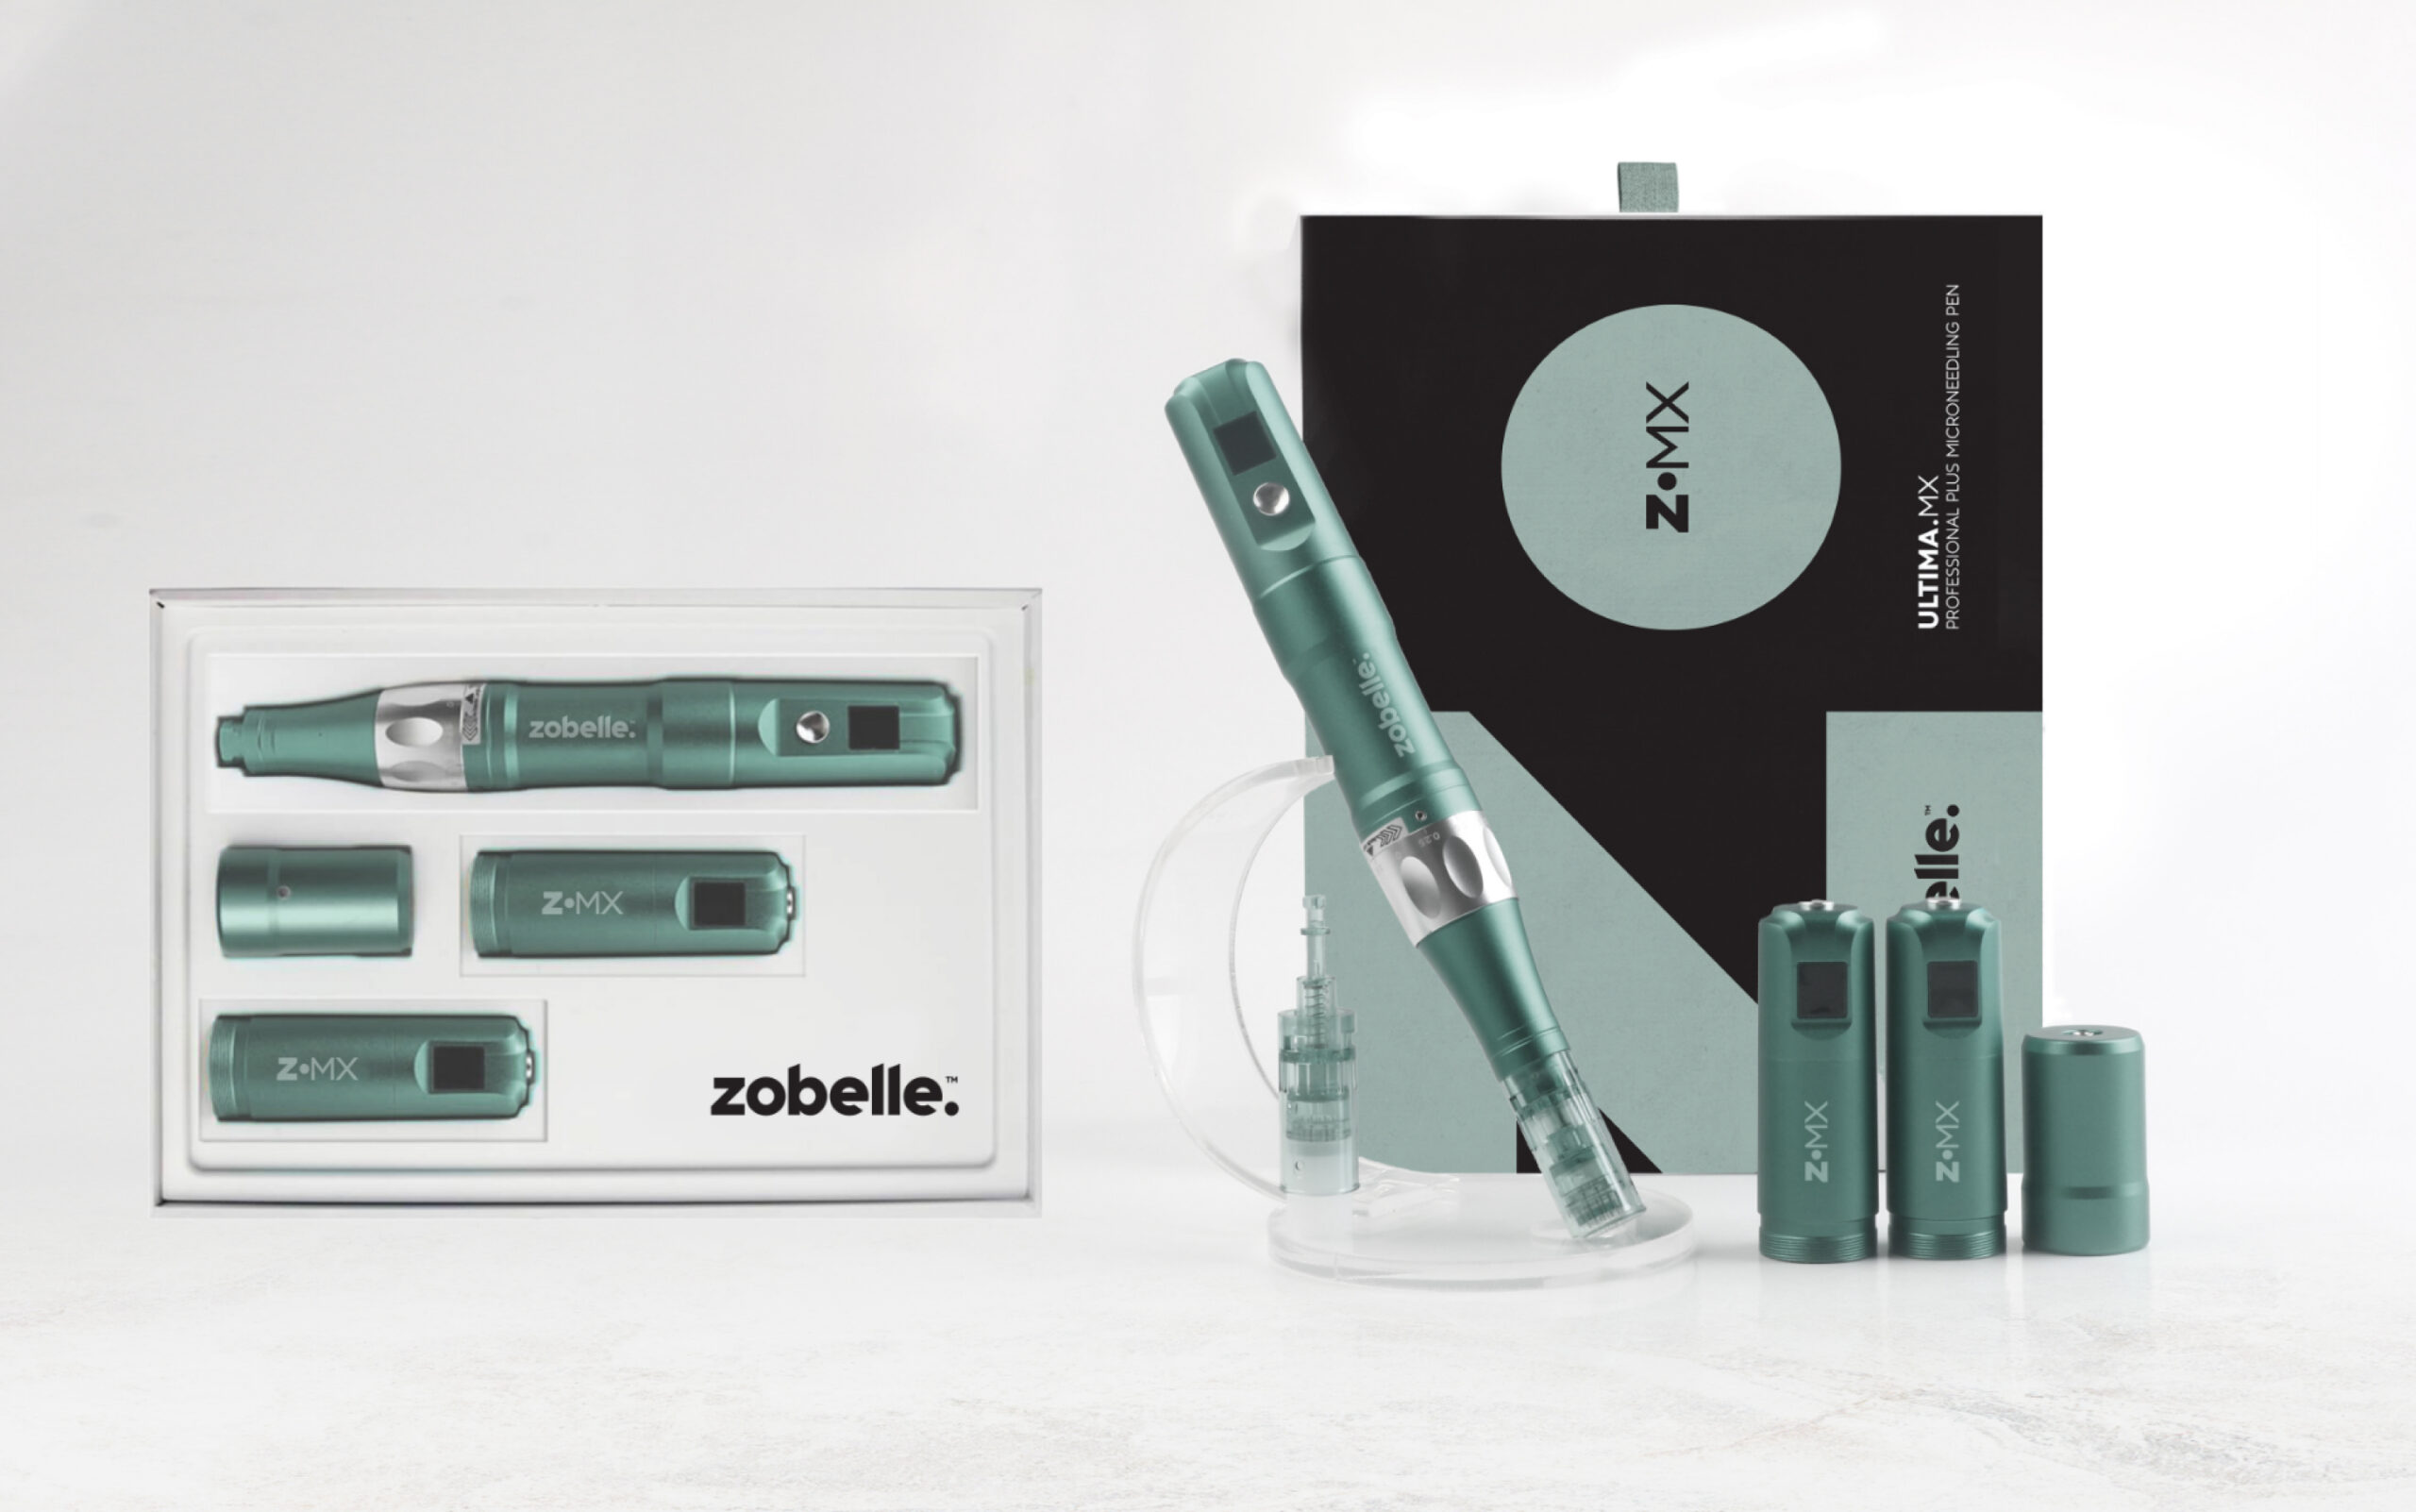 Zobelle Brand Development & Packaging Design by TL Design Co.